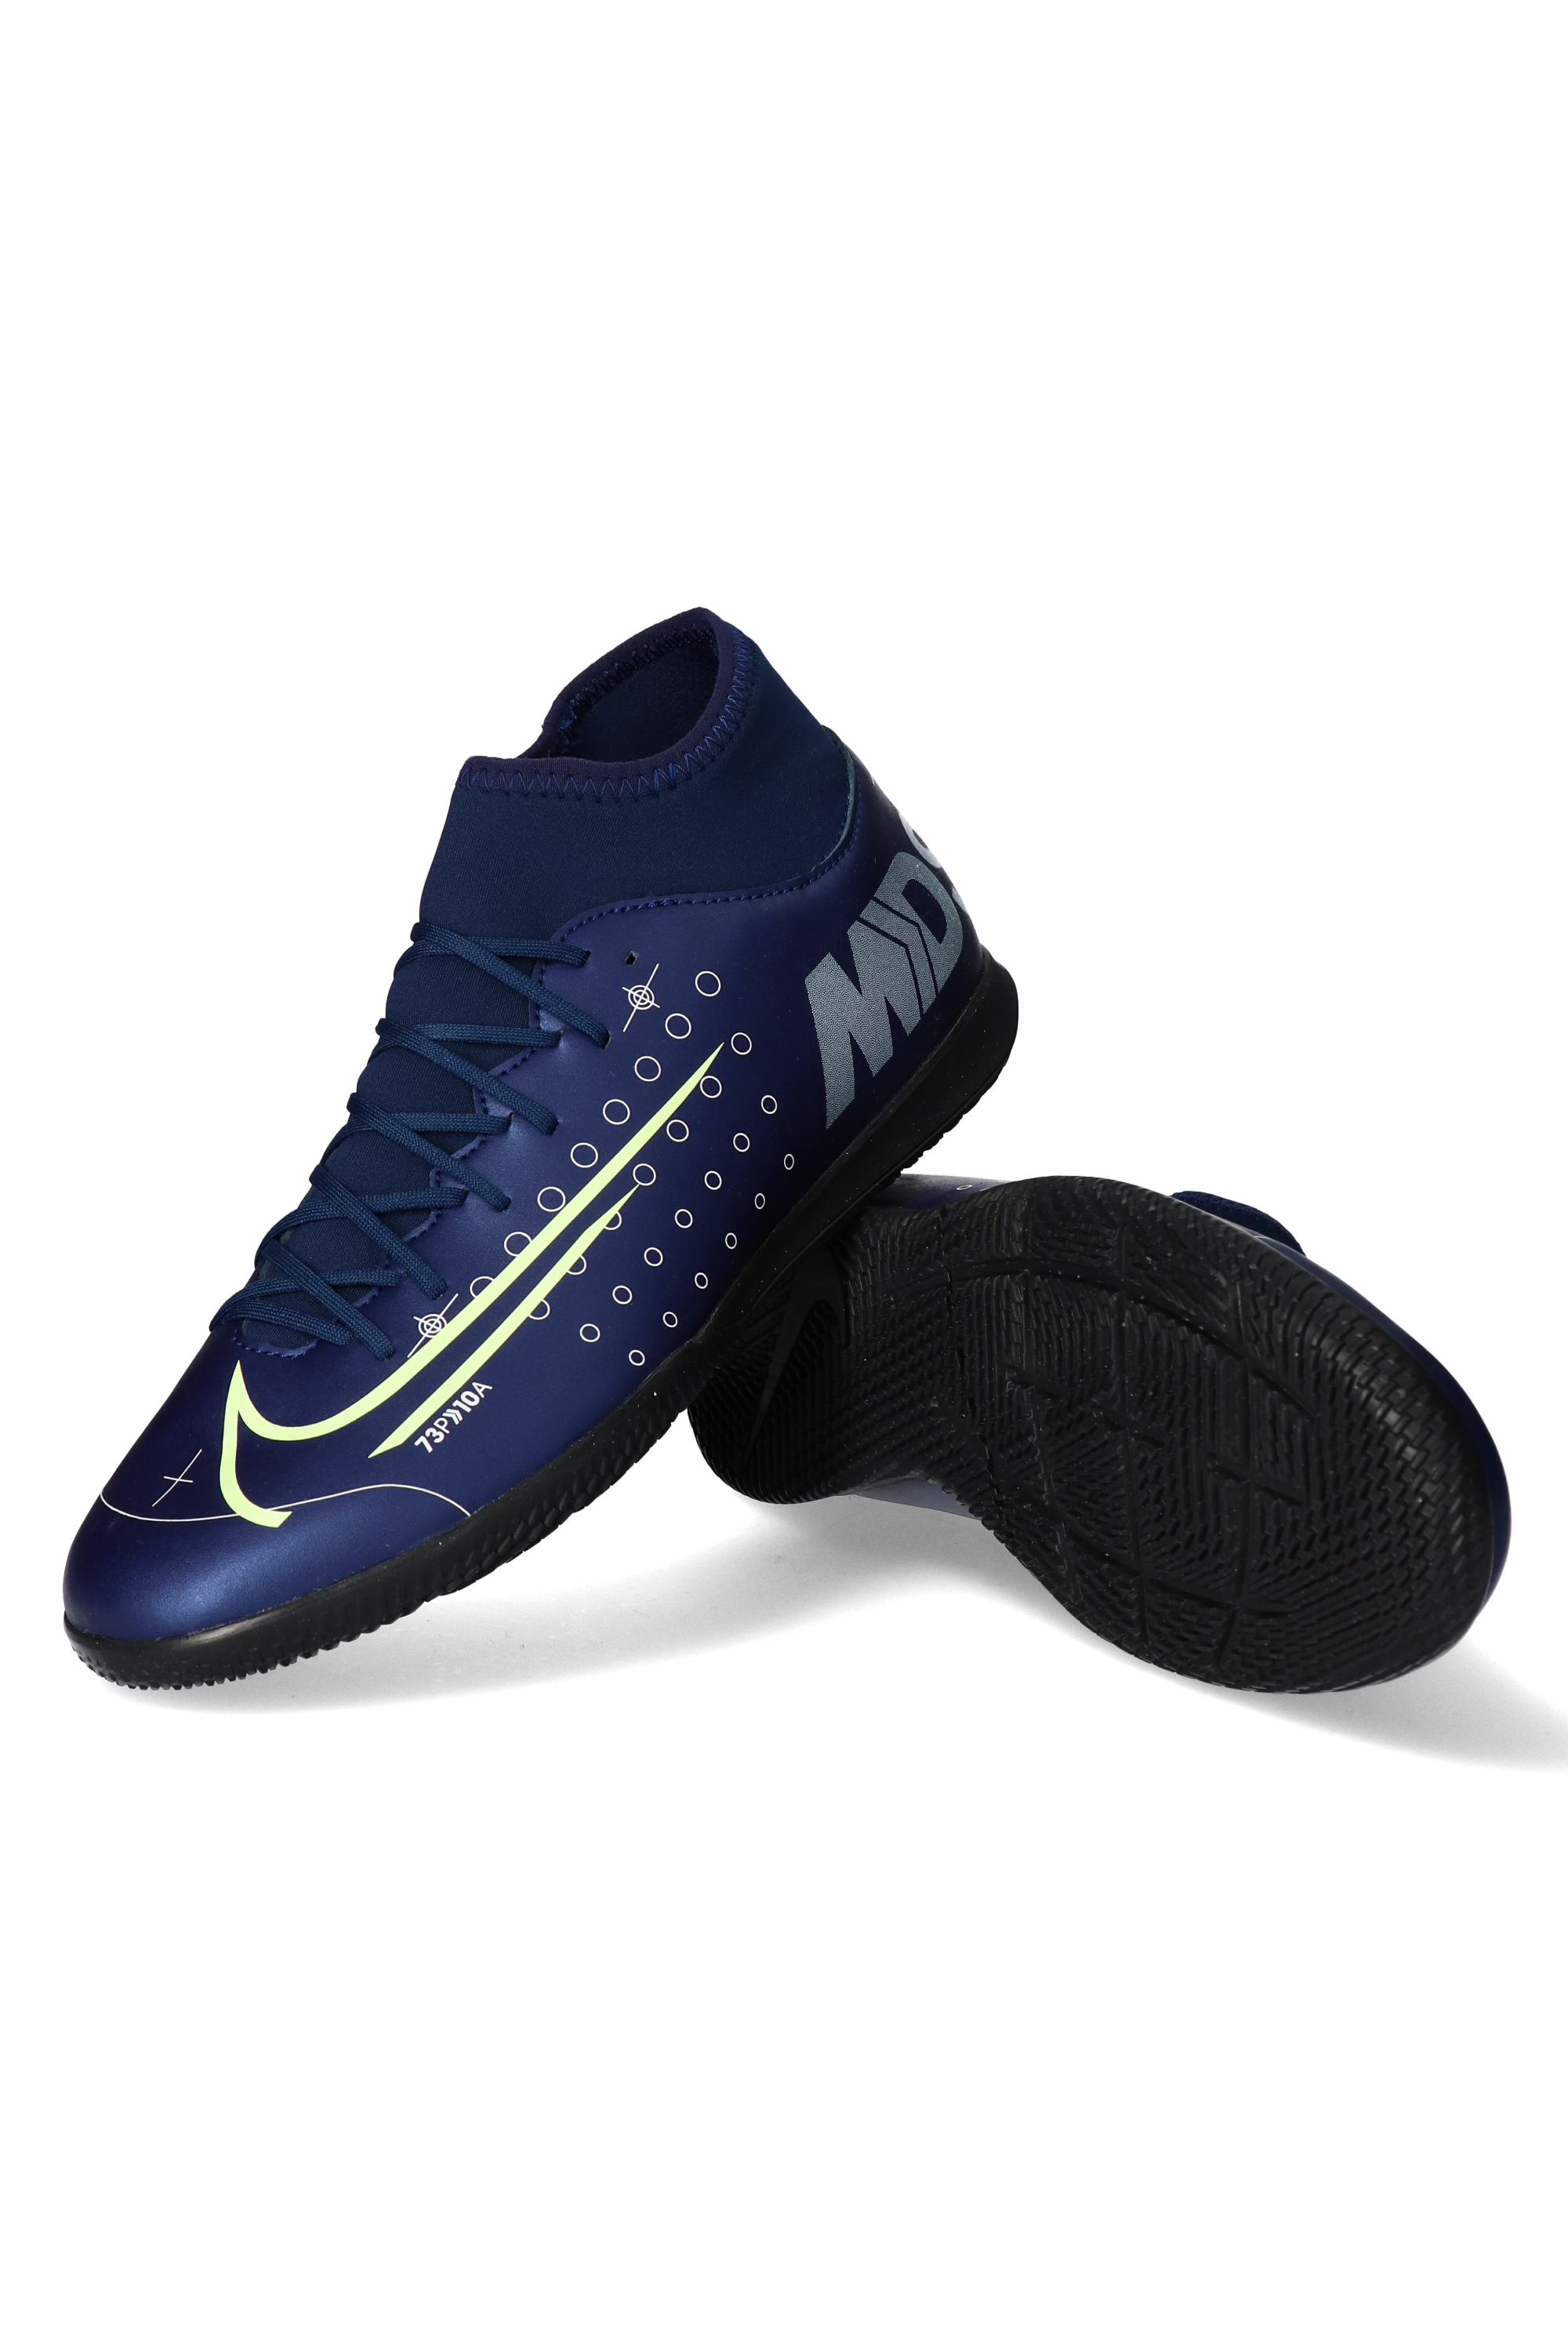 Nike Dream Speed Mercurial Superfly VII Elite FG Mens Boots